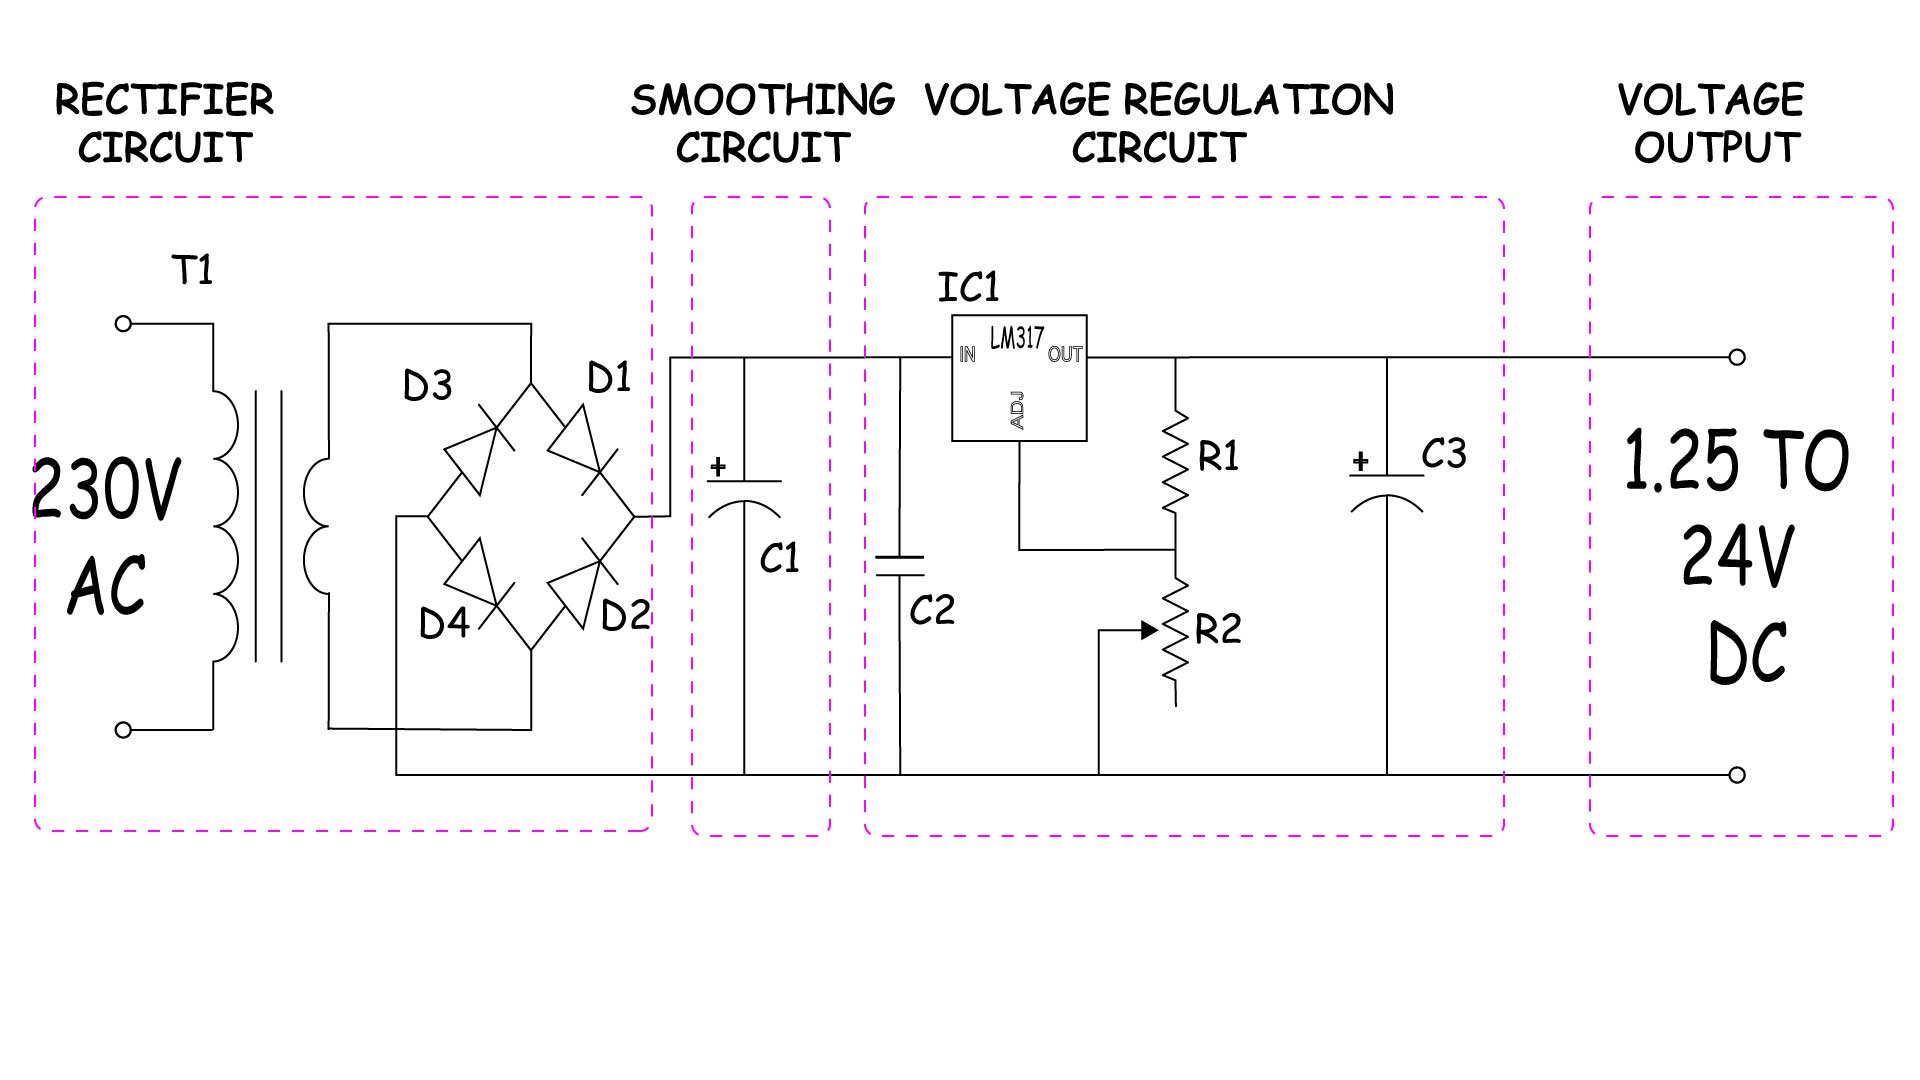 Basic circuit design LM317 variable voltage regulator